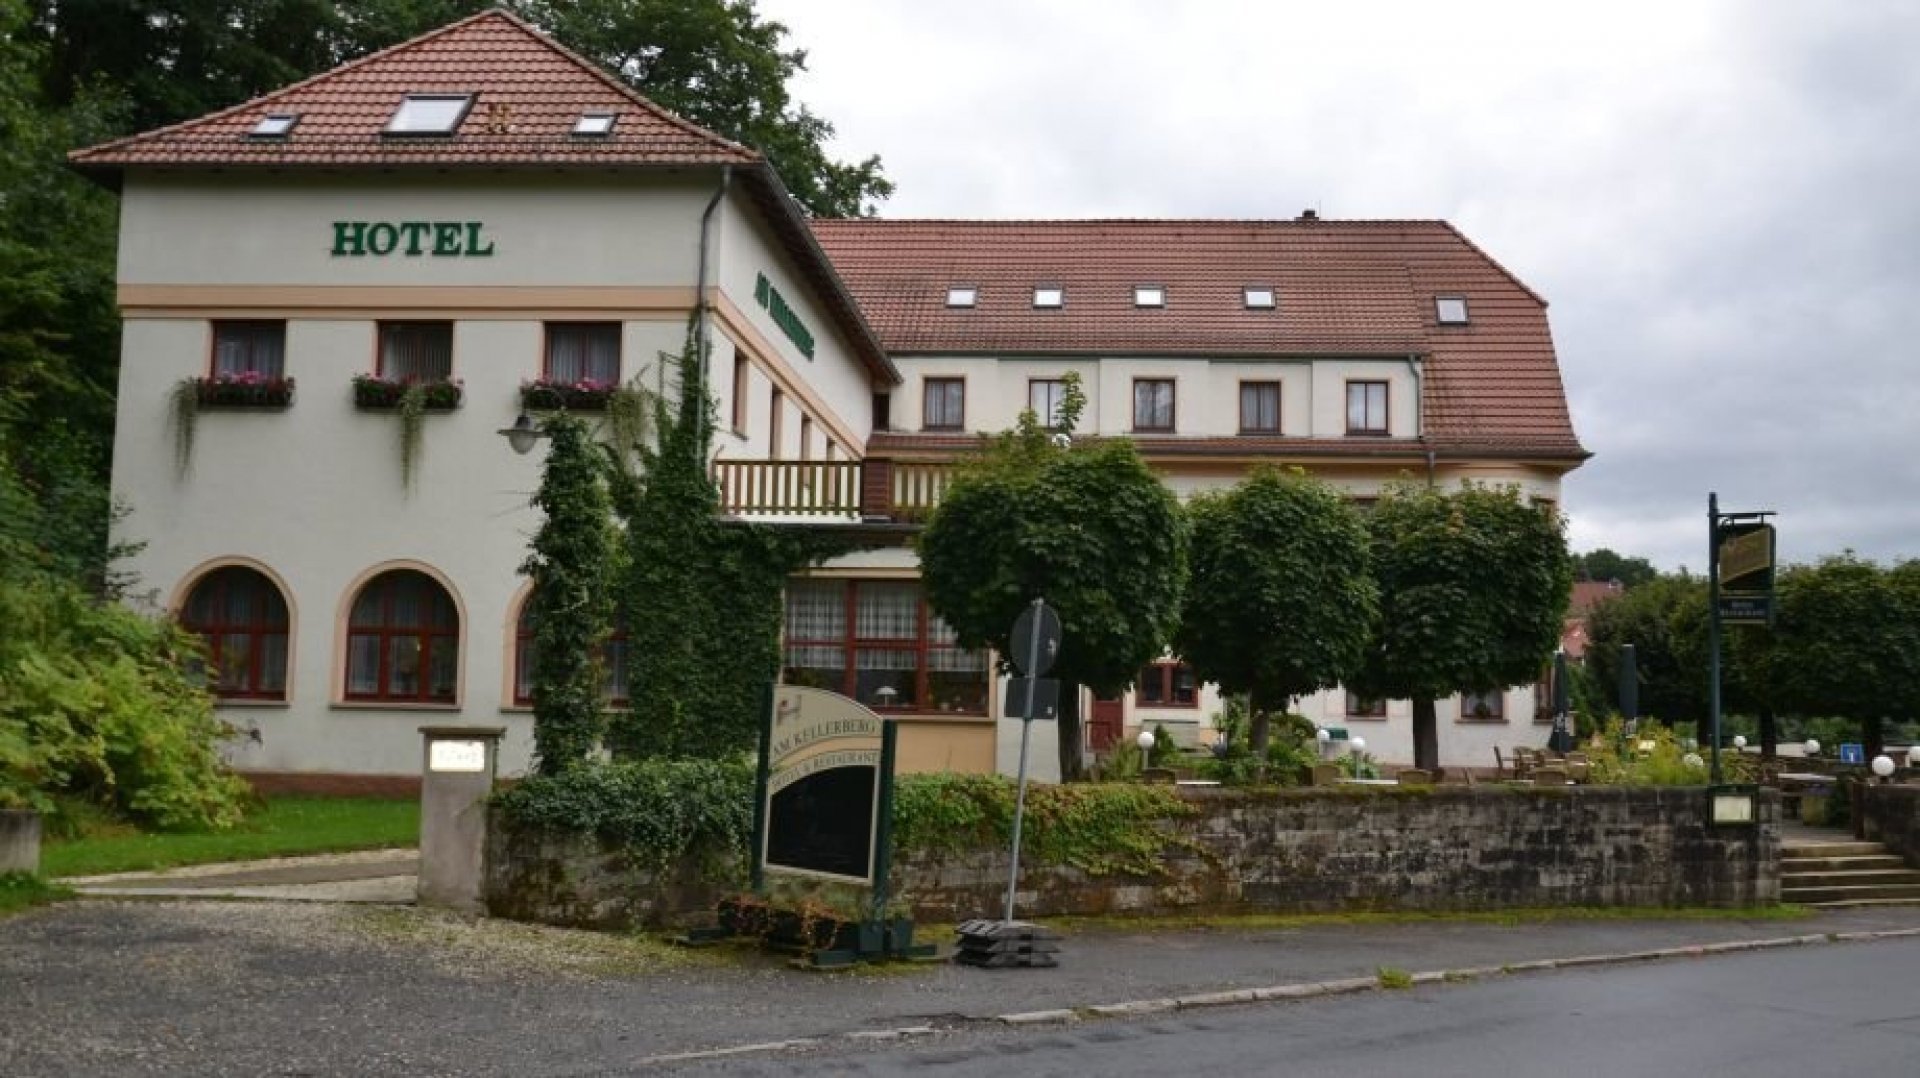 5 zu 4 Angebot - Hotel am Kellerberg